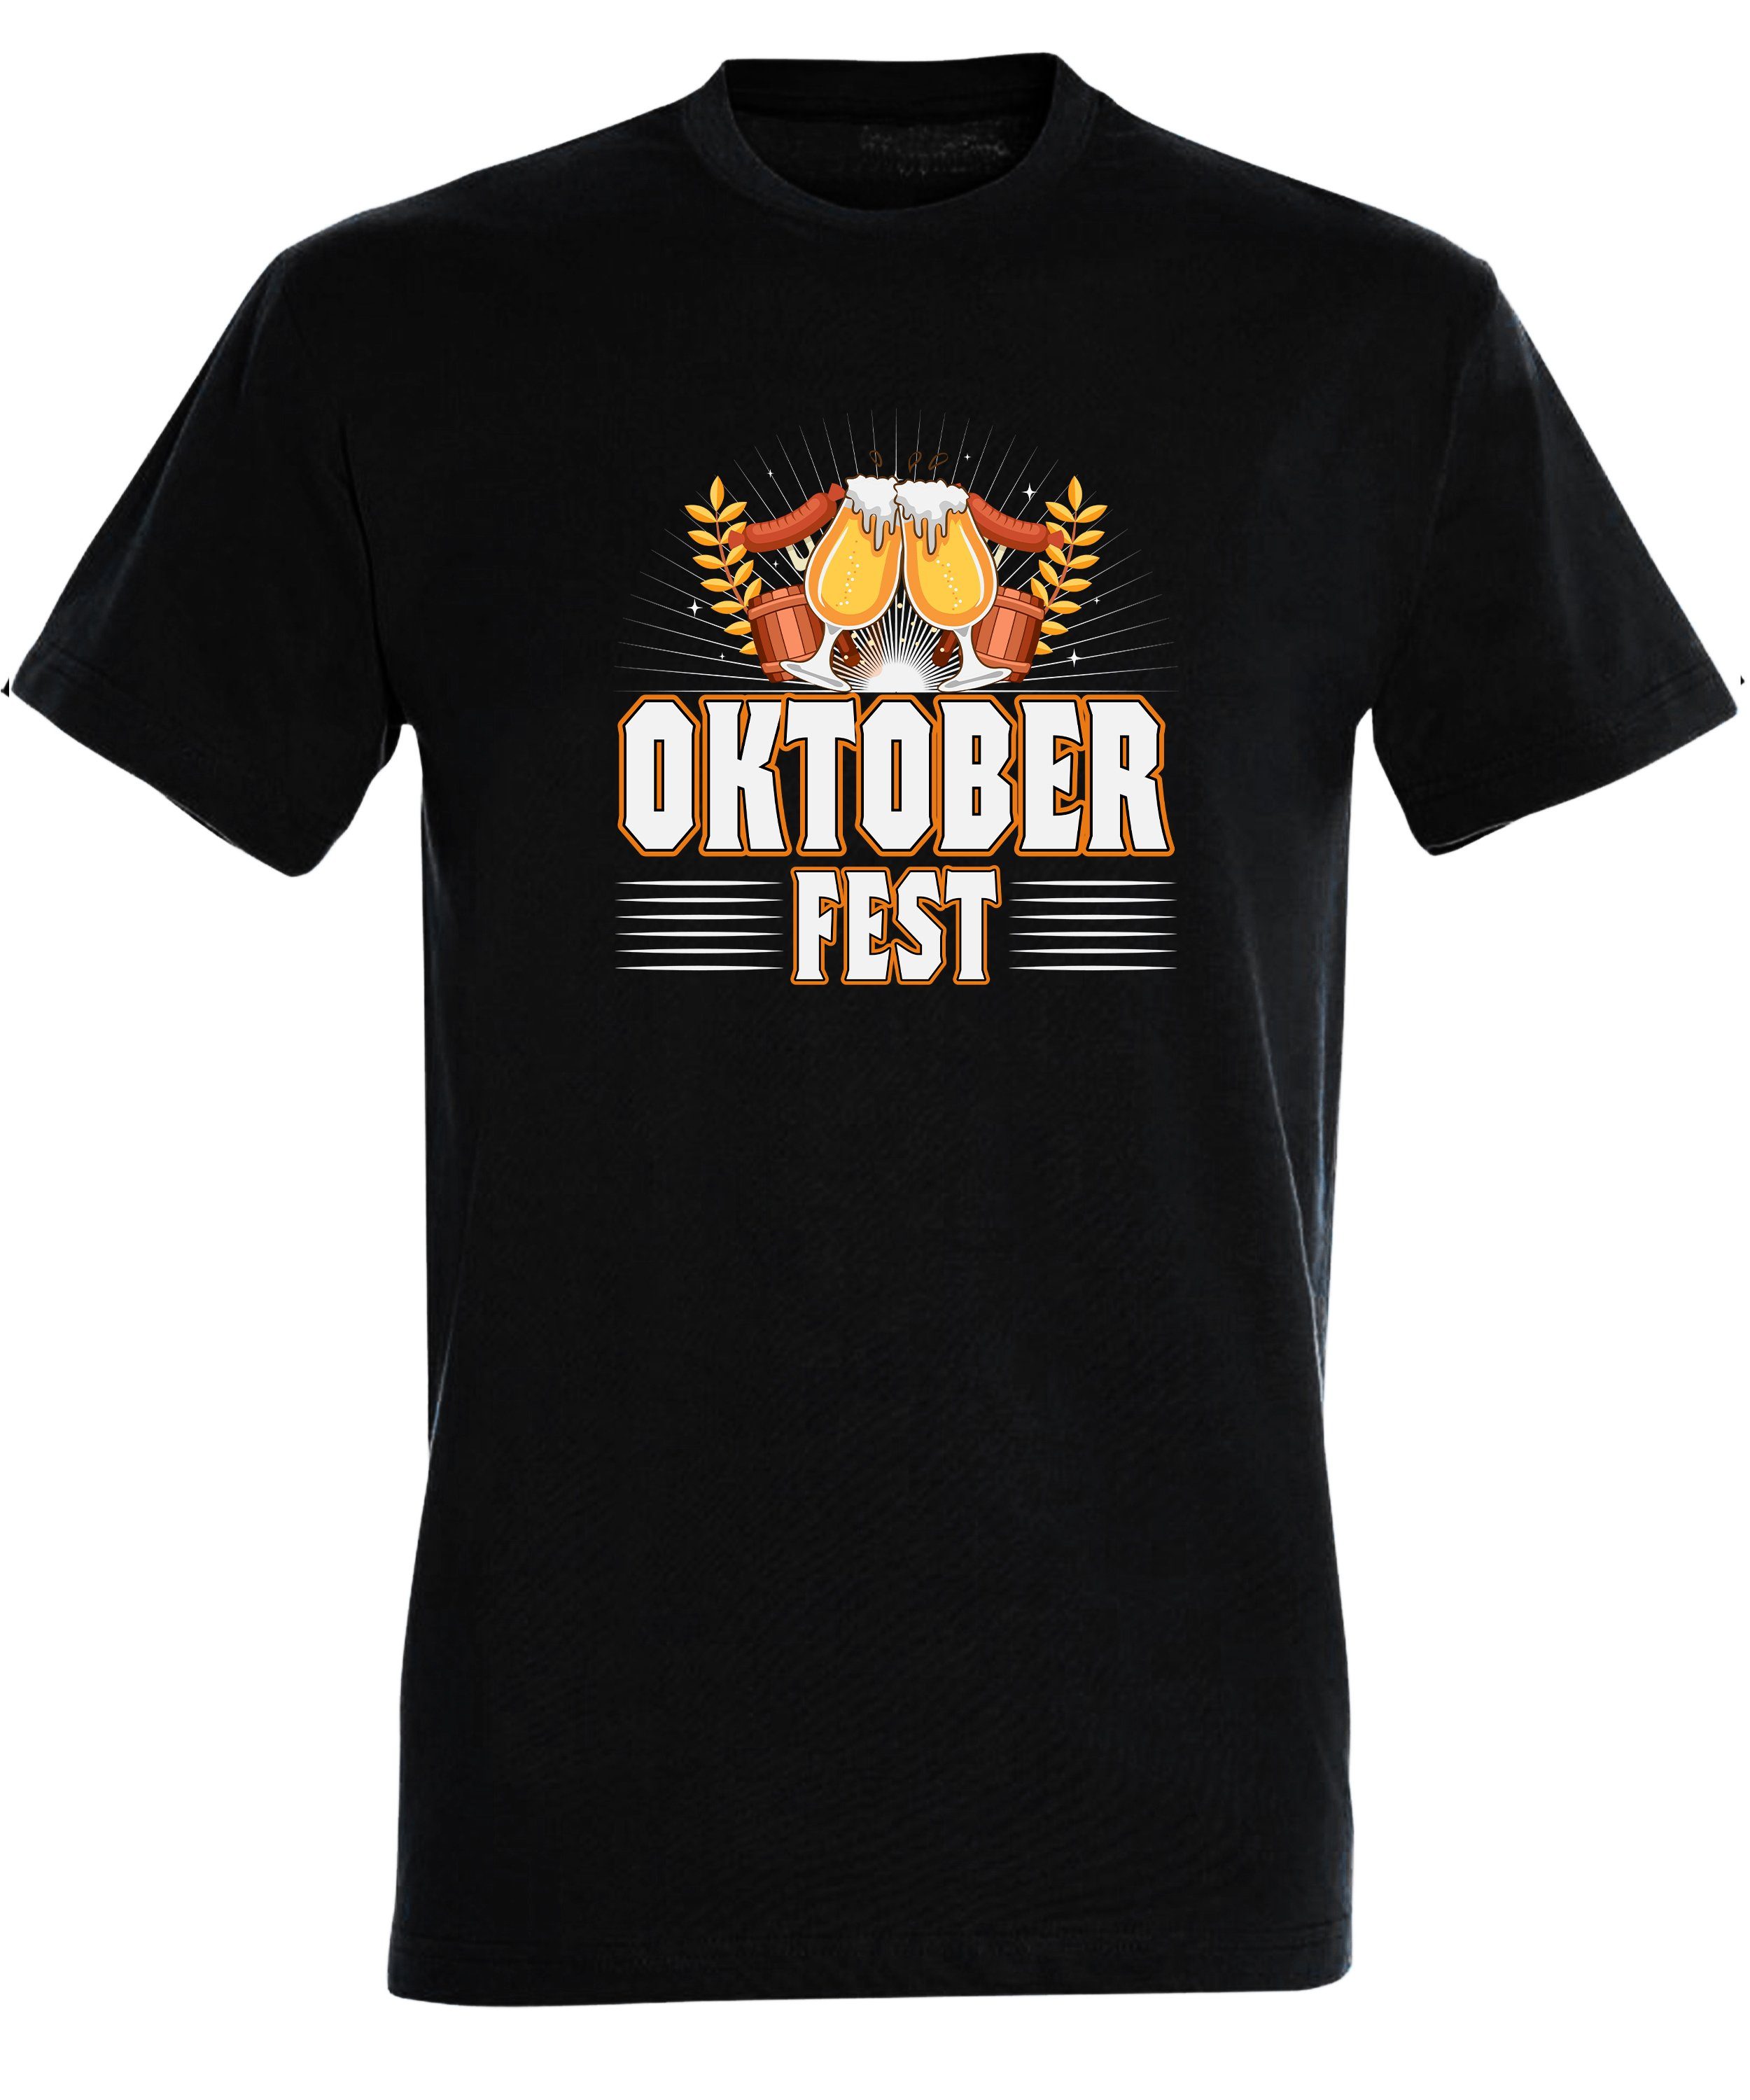 mit Fit, Herren T-Shirt Aufdruck schwarz - Baumwollshirt MyDesign24 Party T-Shirt Shirt Regular Oktoberfest i327